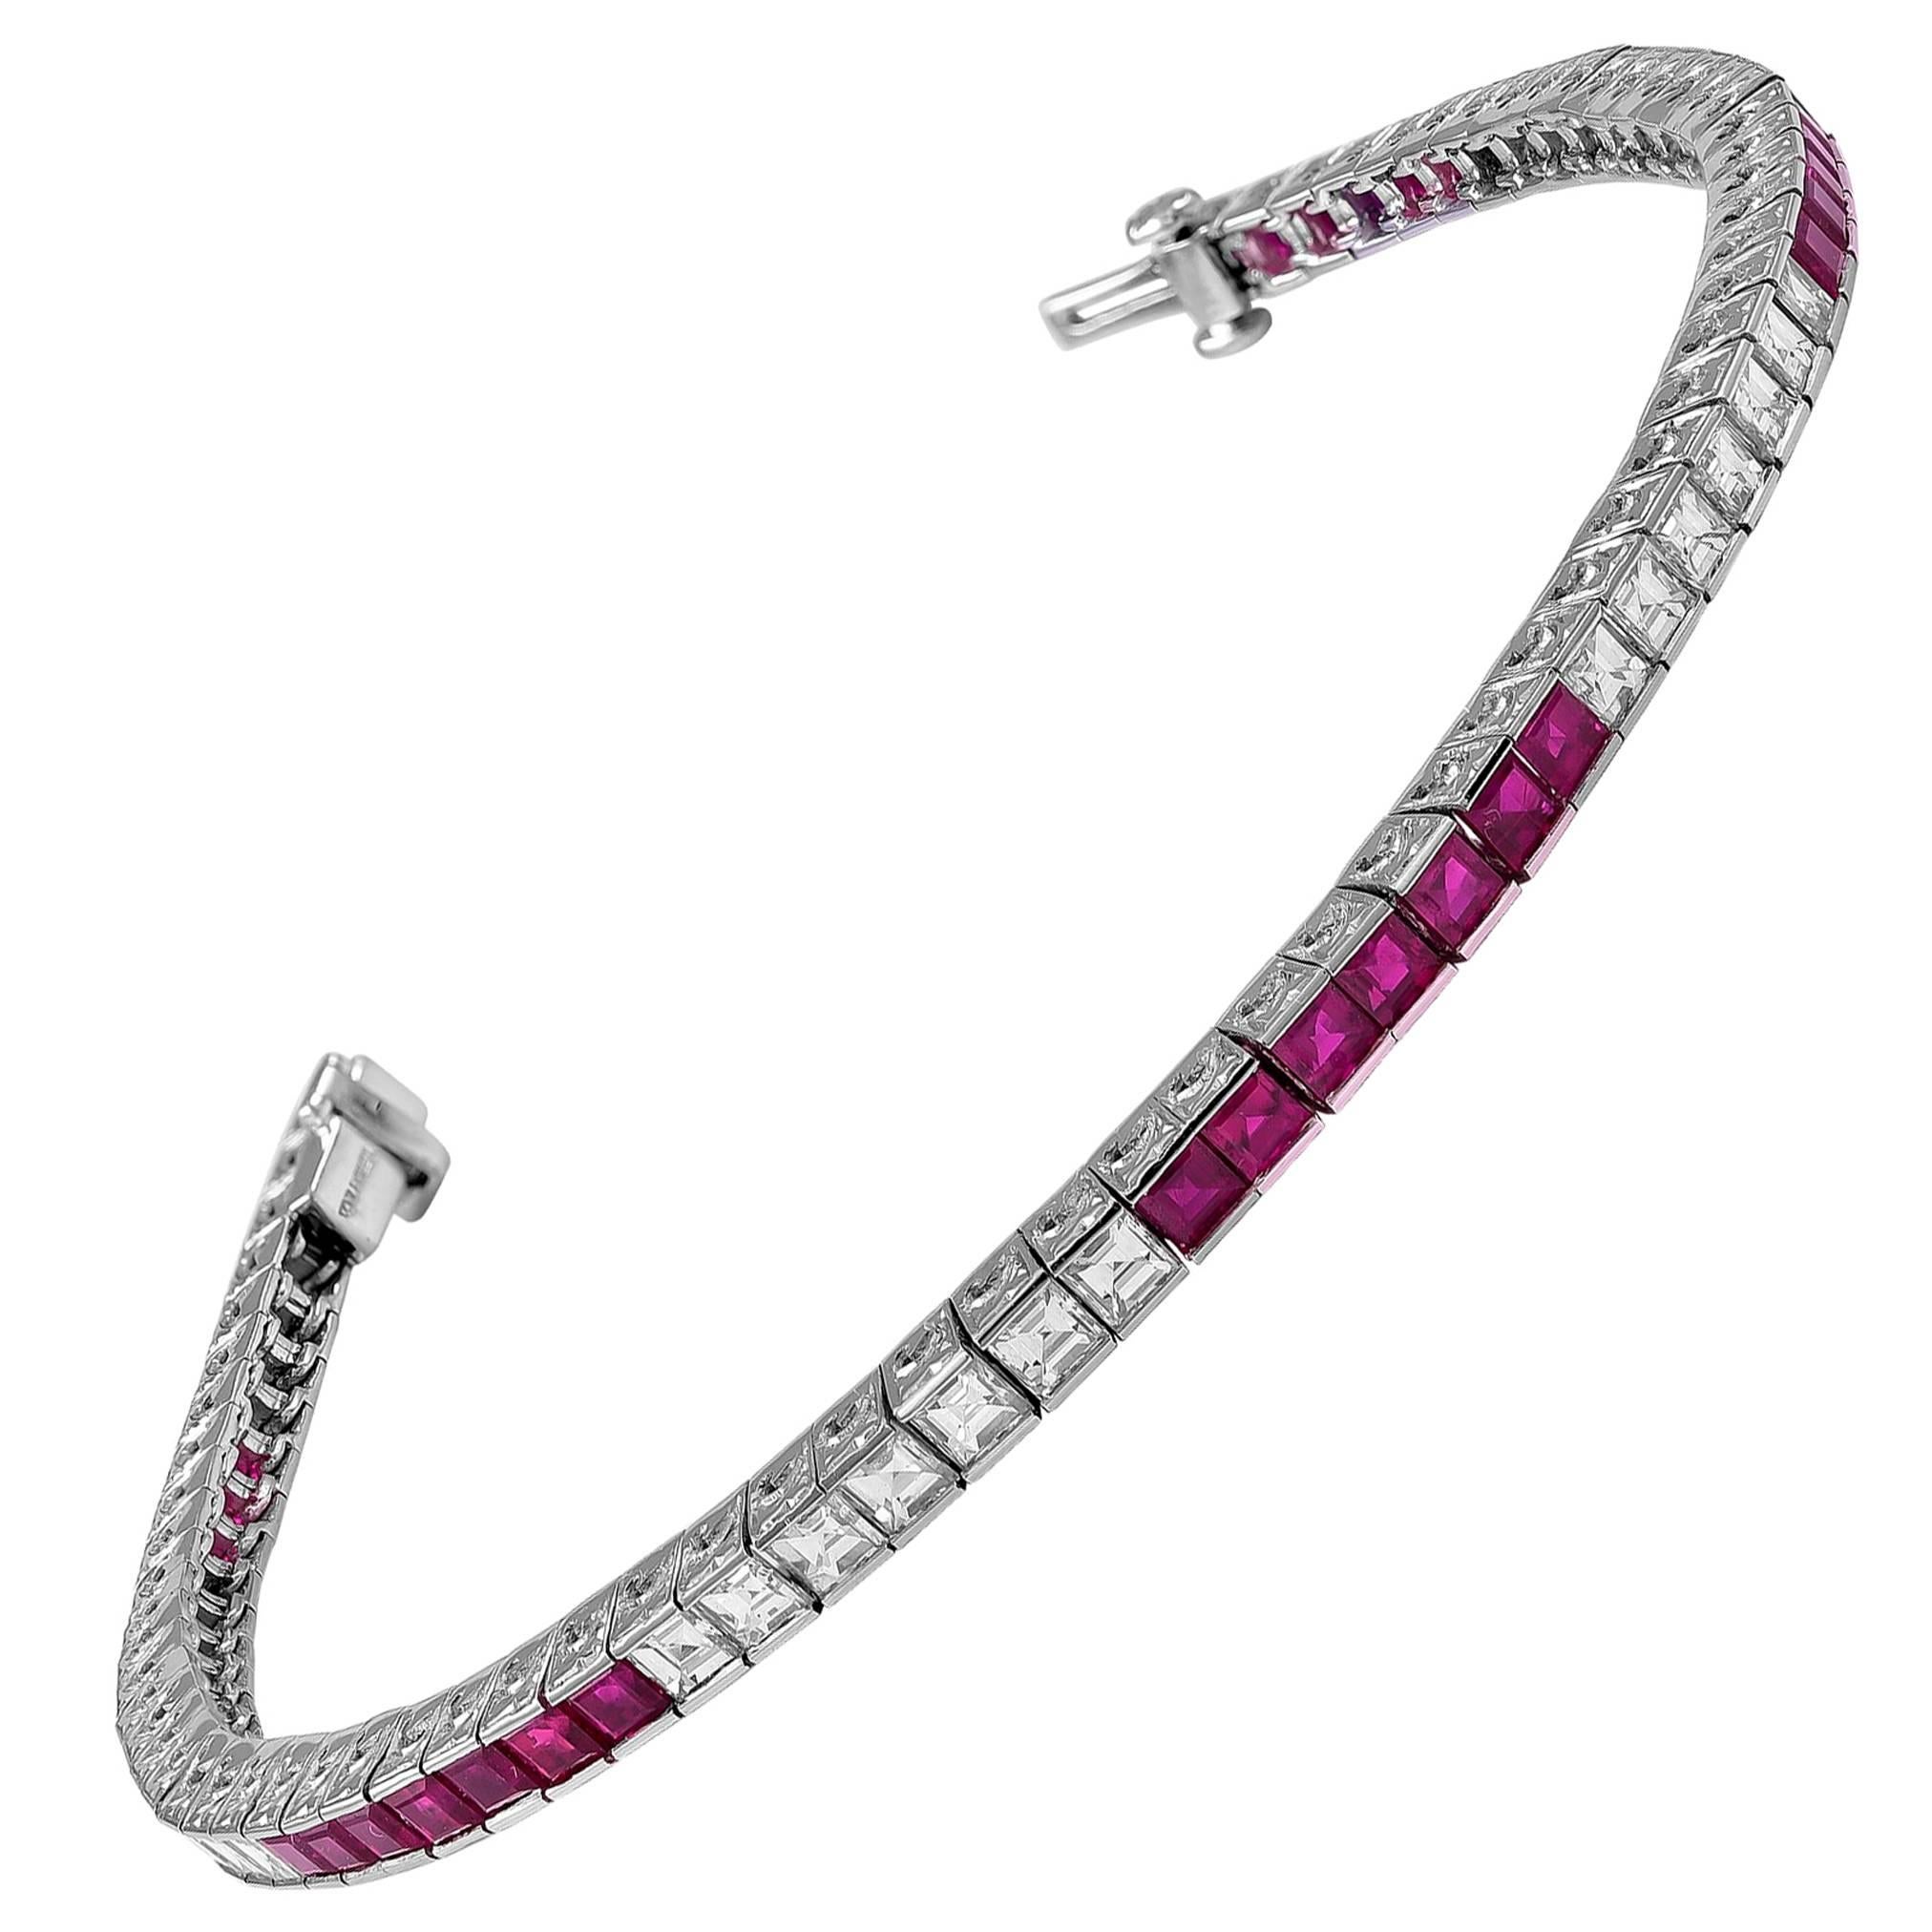 Art Deco Tiffany & Co Diamond Bracelet - Ruby Lane